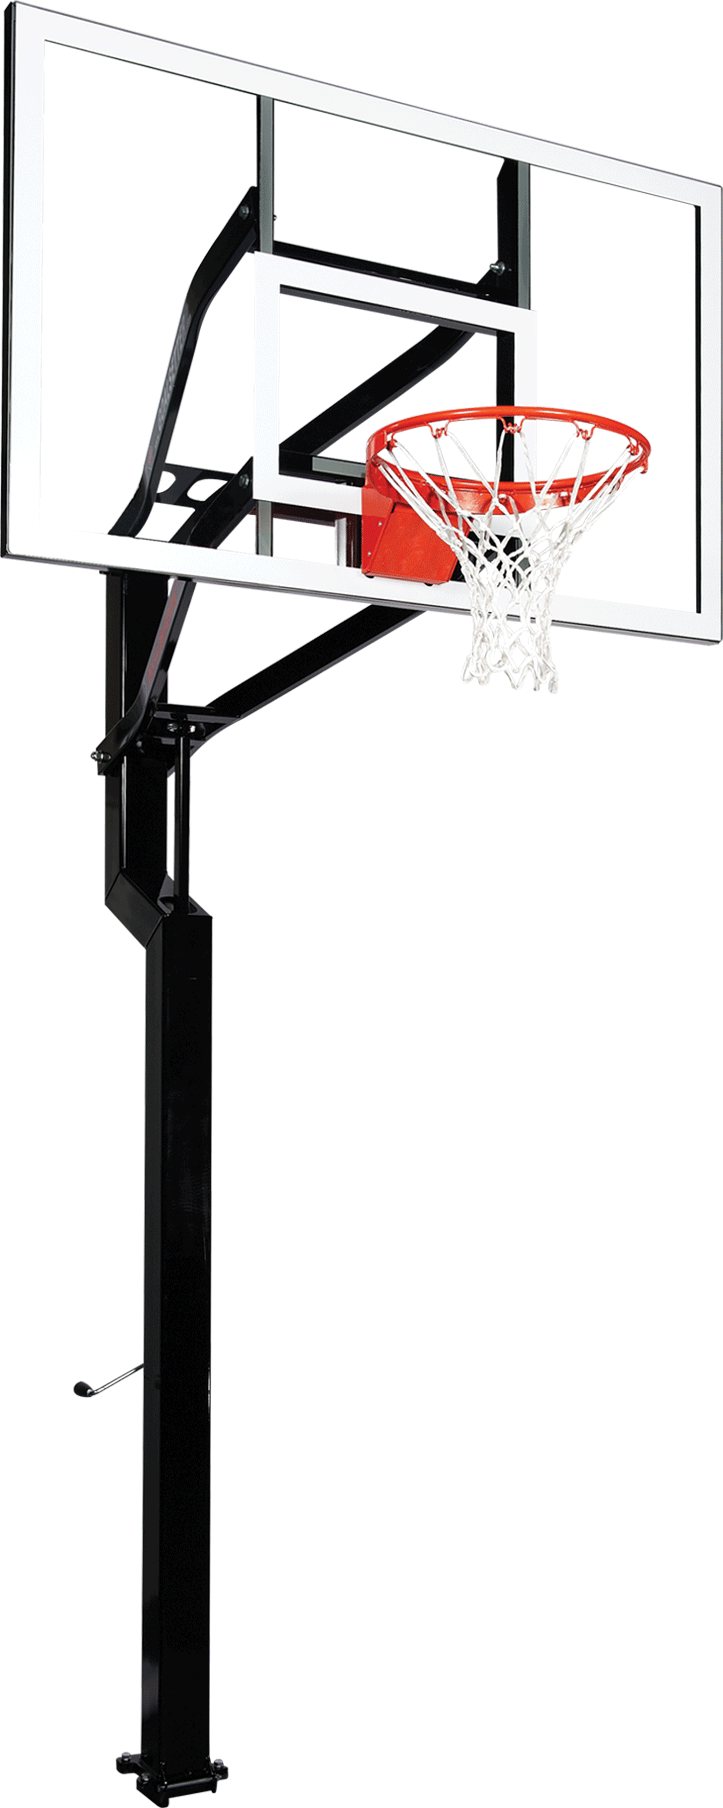 Basketball Hoops on sale - Signature Basketball Goals Goalsetter All-American in ground basket ball hoops - 60 inch basketball hoop